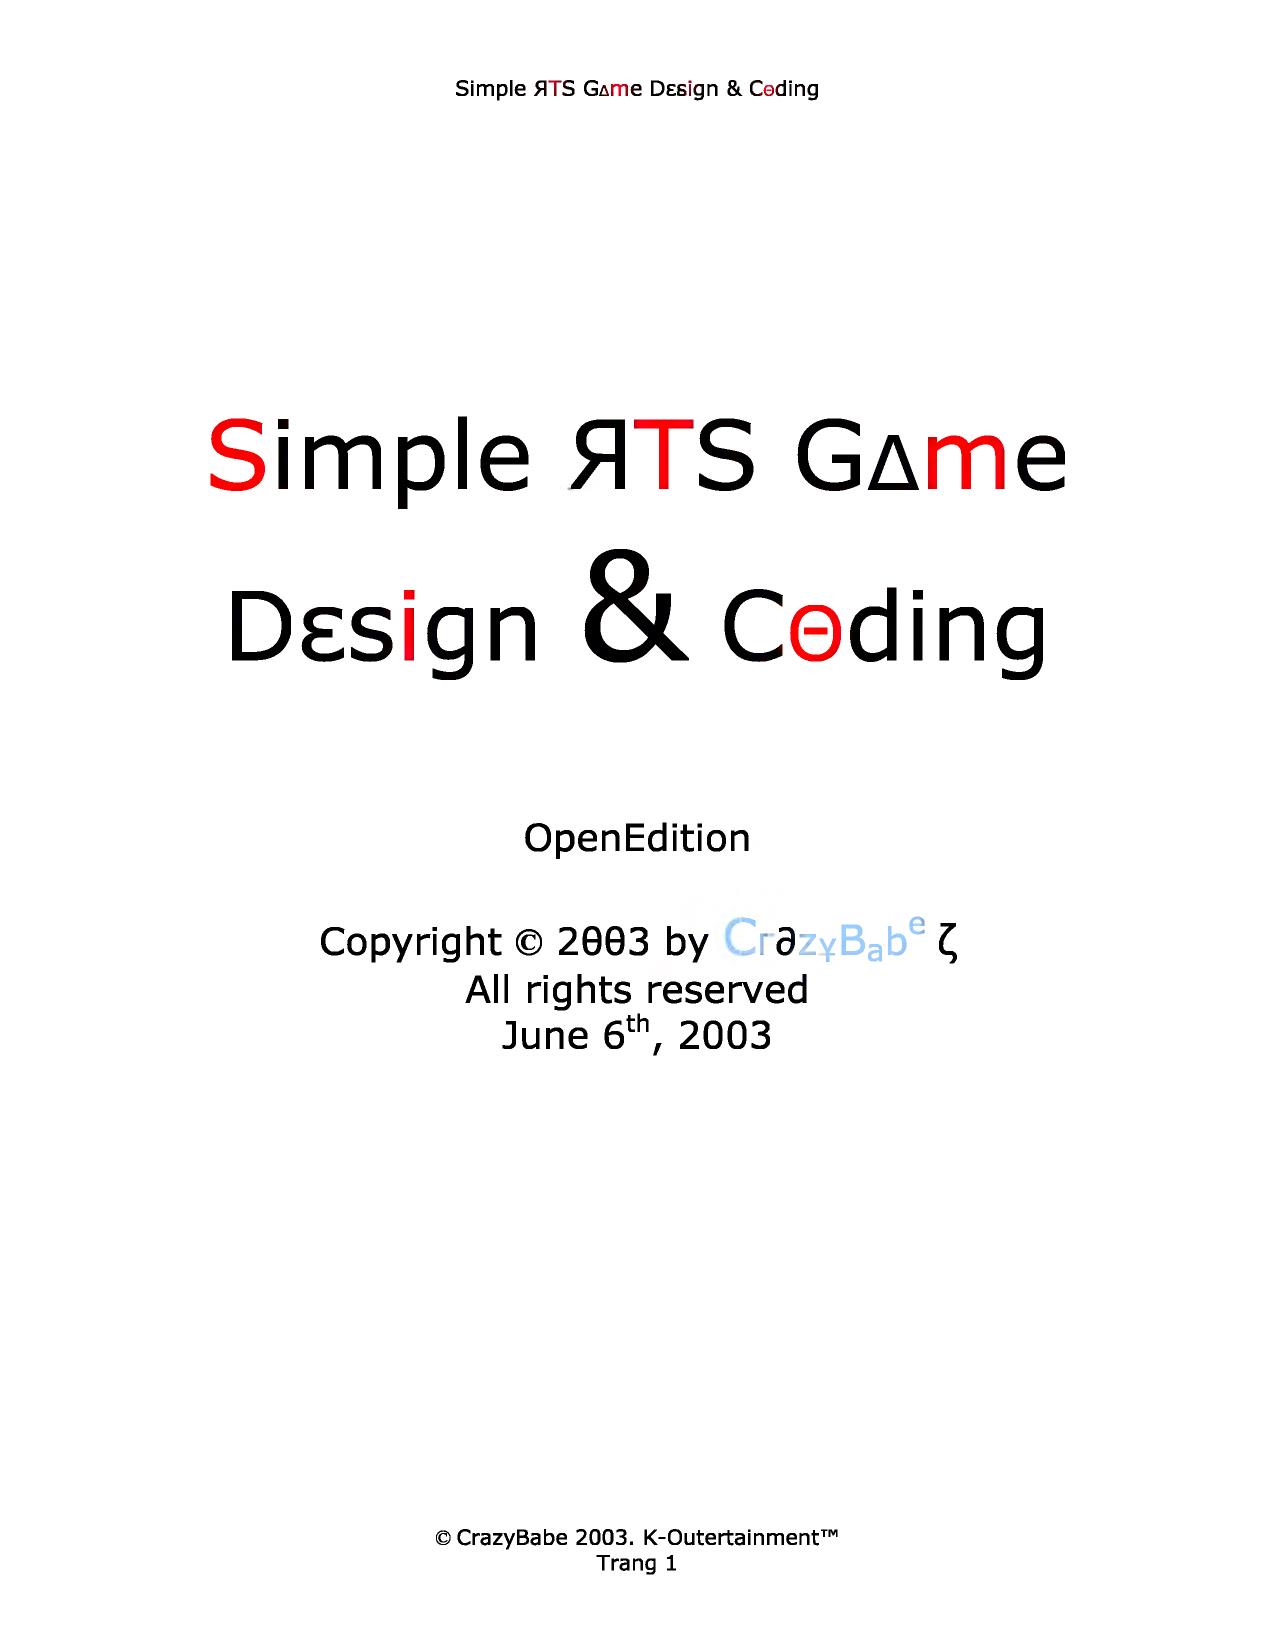 Simple RTS game design & Coding trang 2